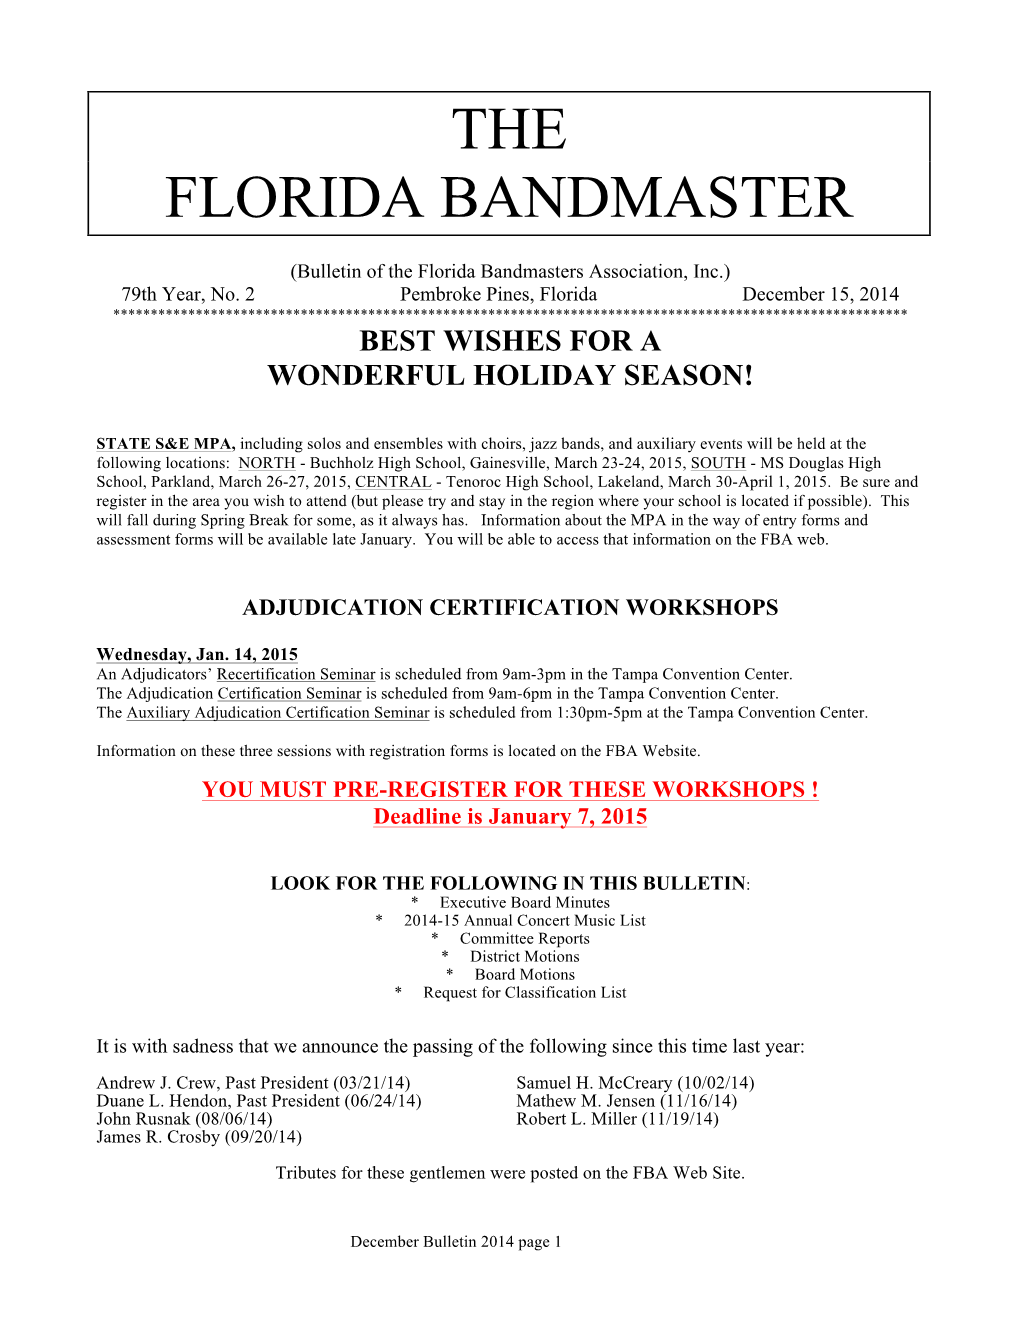 The Florida Bandmaster